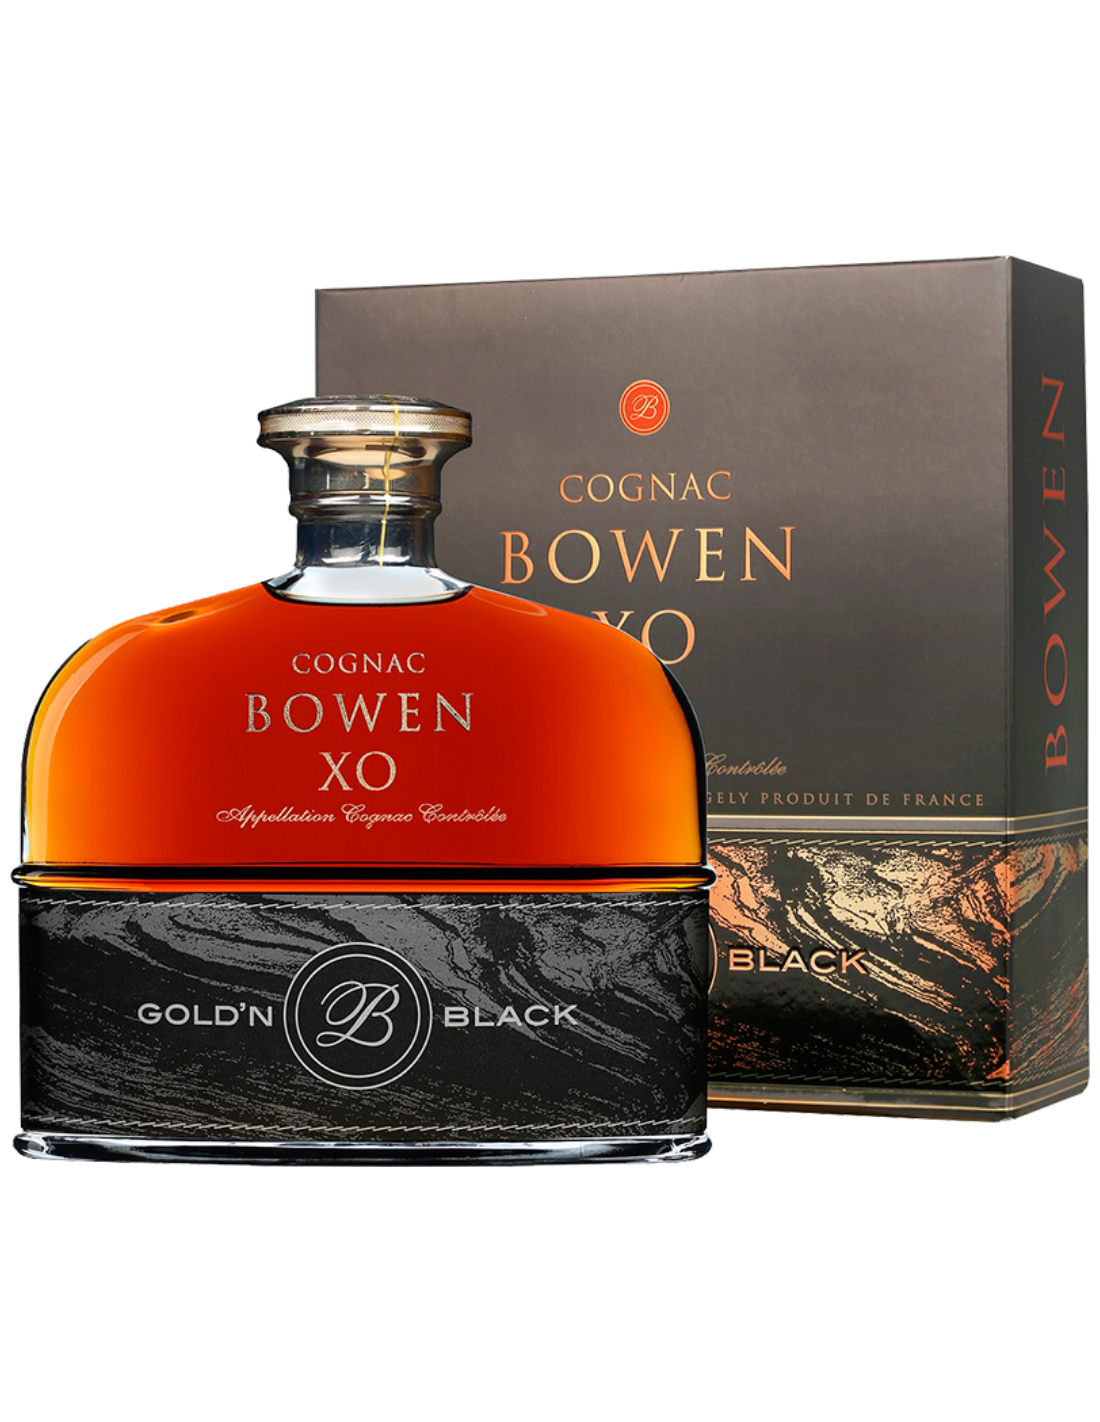 Coniac Bowen XO Gold’N Black, 40% alc., 0.7L, Franta alcooldiscount.ro